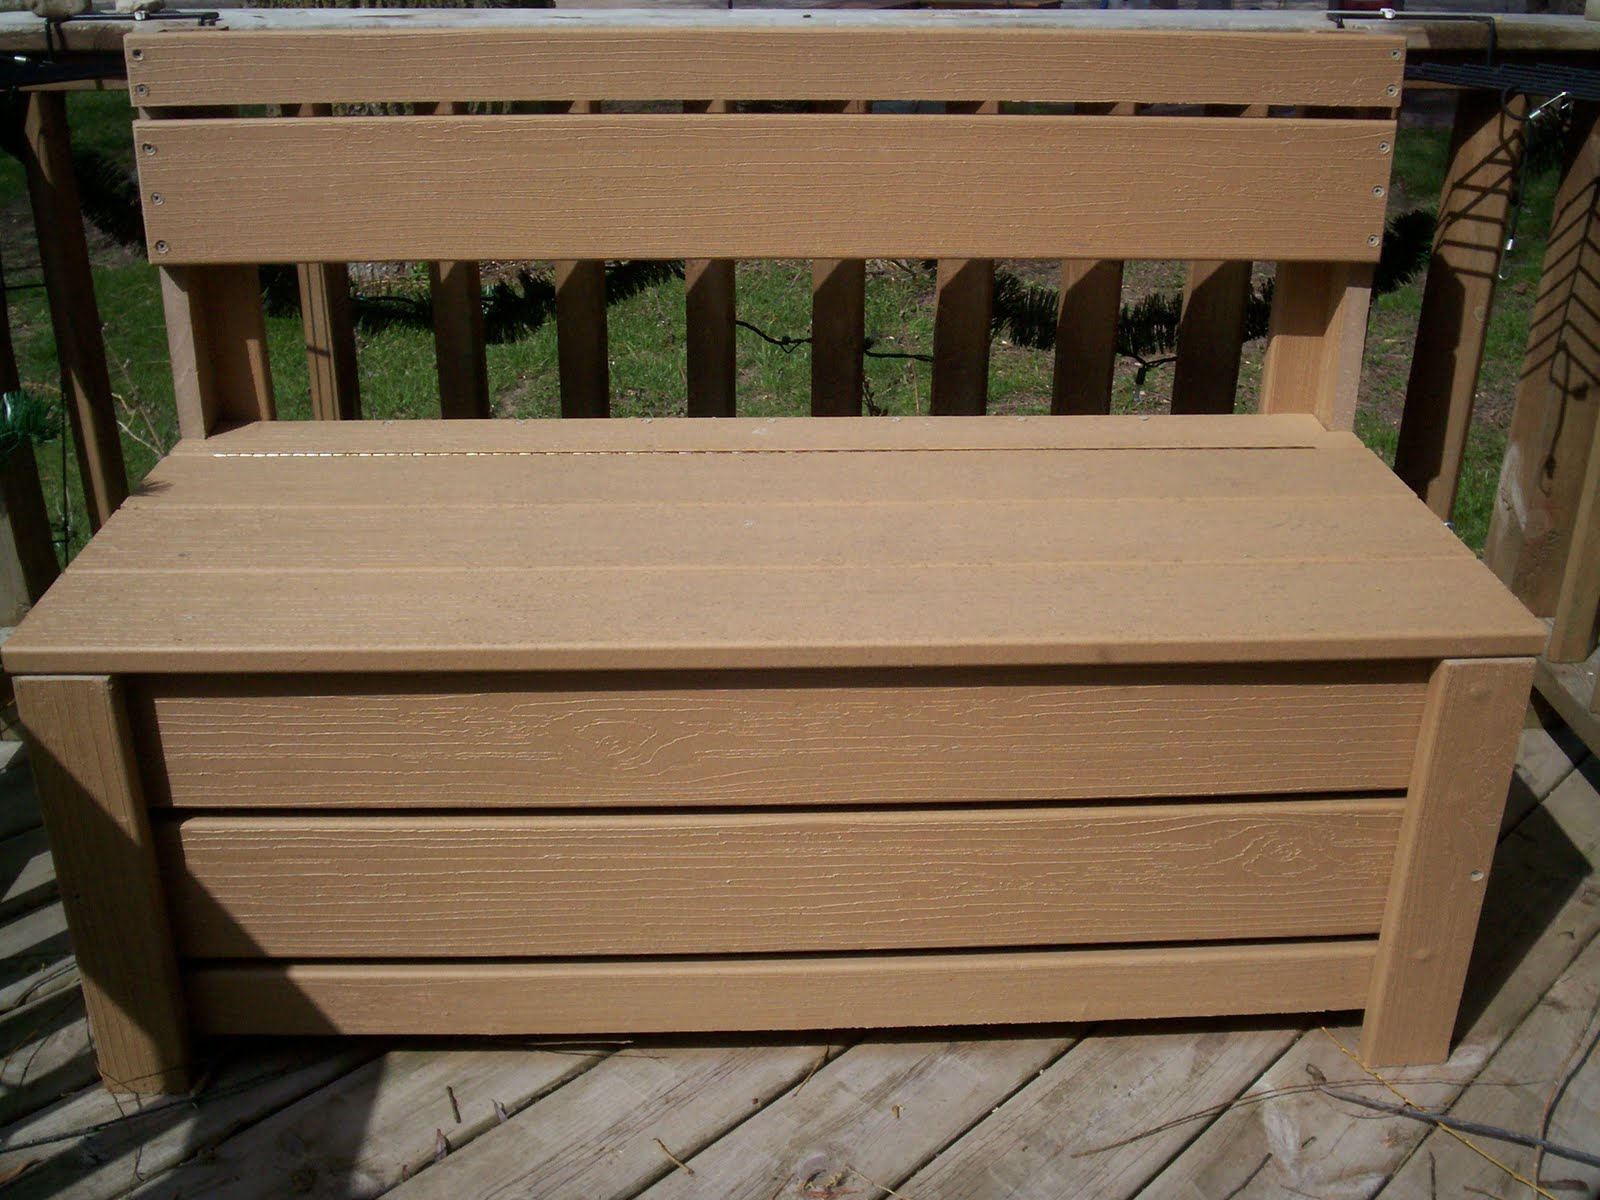 Tru Tales Feats Deck Storage Bench with regard to sizing 1600 X 1200